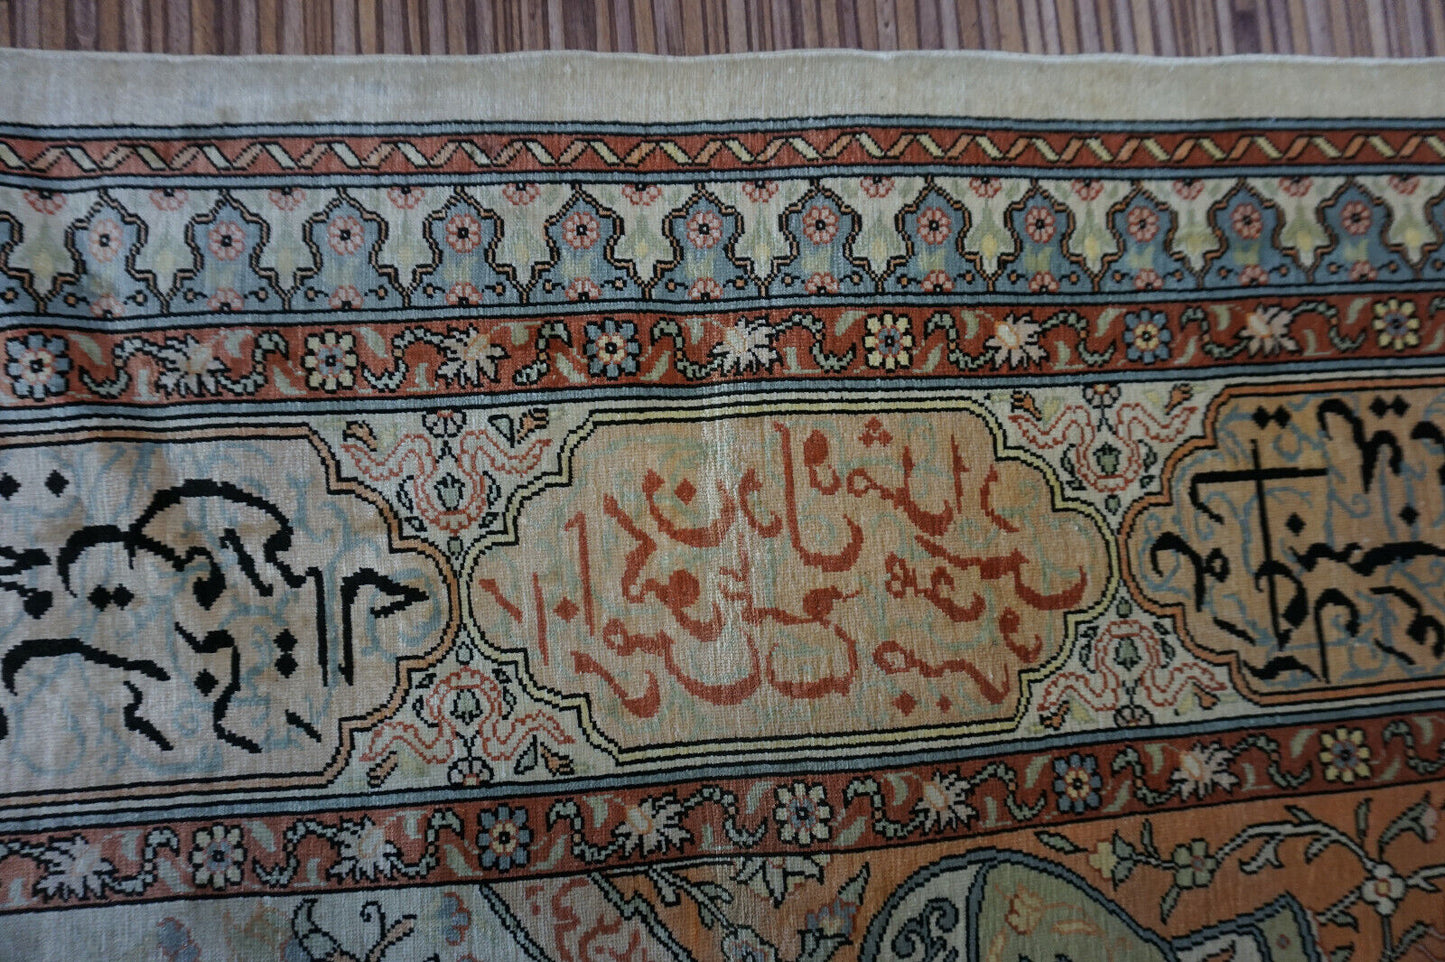 Back view of the Handmade Vintage Turkish Hereke Silk Rug showcasing craftsmanship